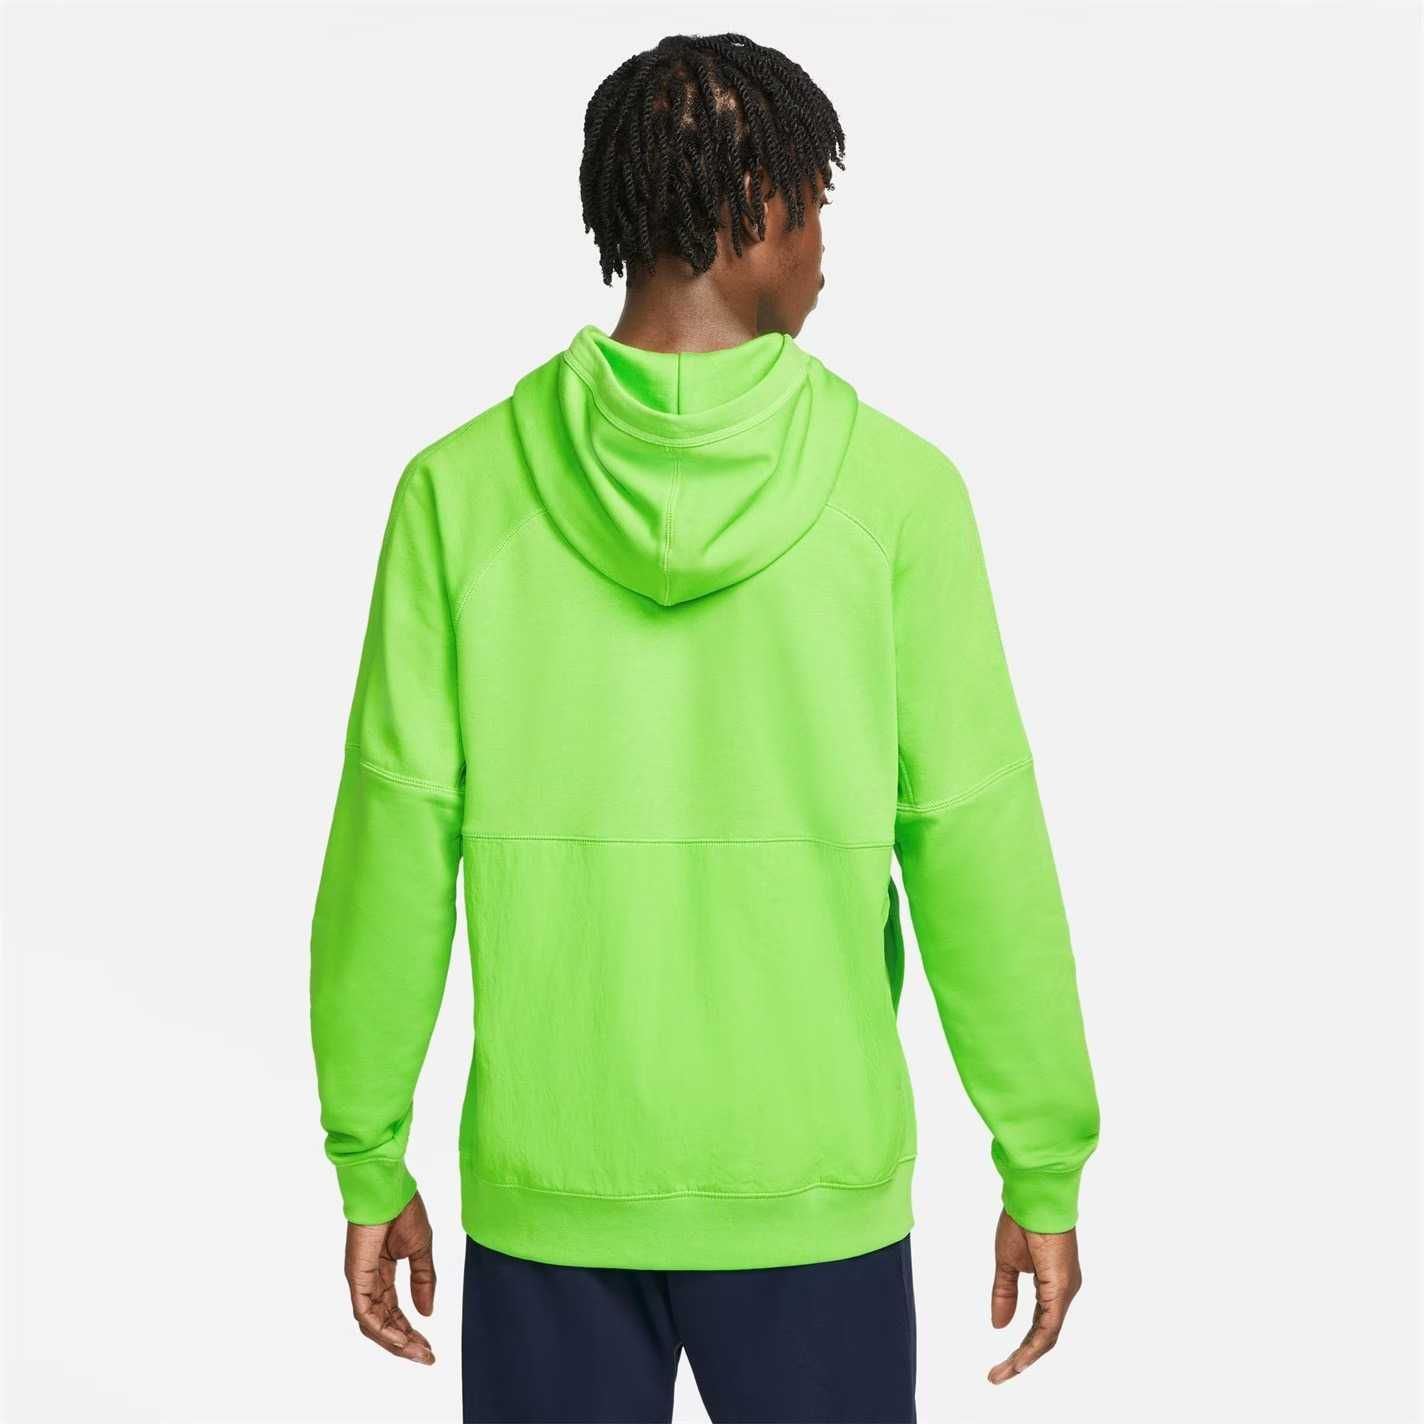 Sweatshirt Nike French Terry Nigeria (M)